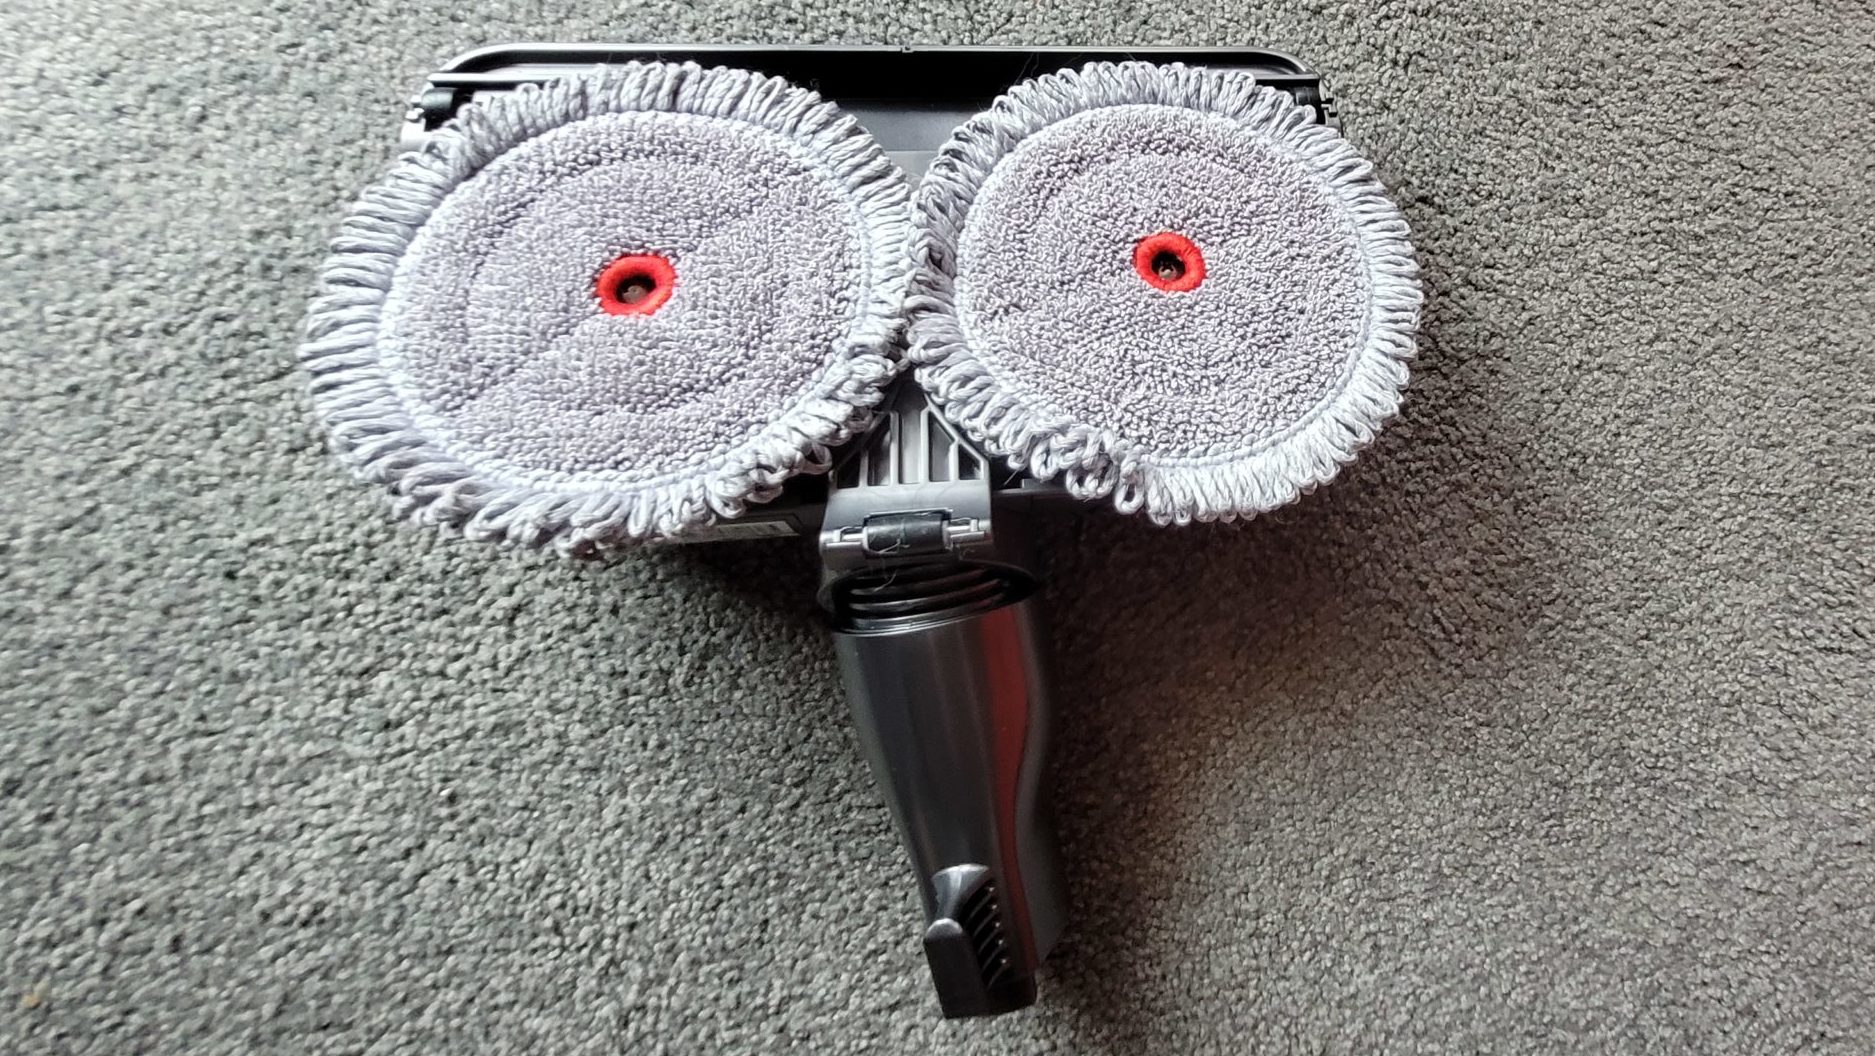 The LG CordZero vacuum's mop nozzle